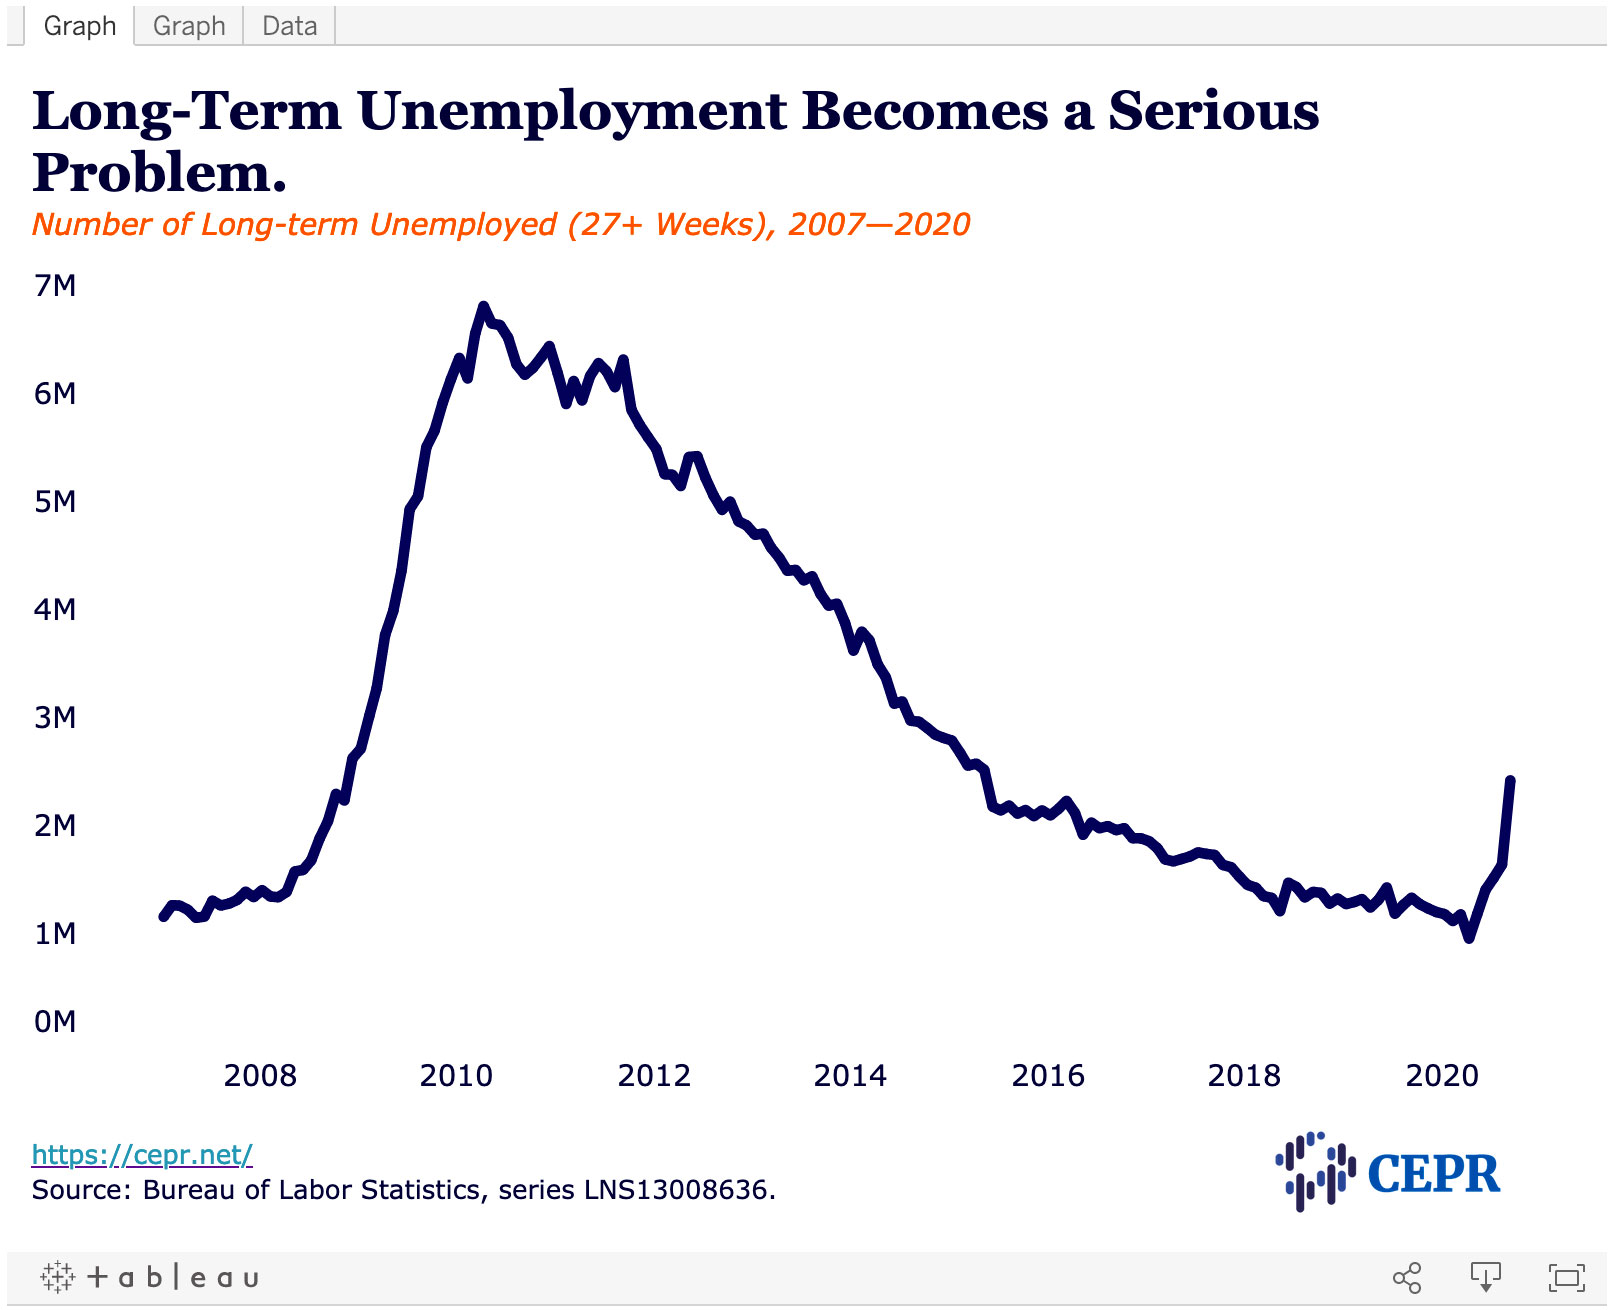 Long-term unemployment becomes a serious problem